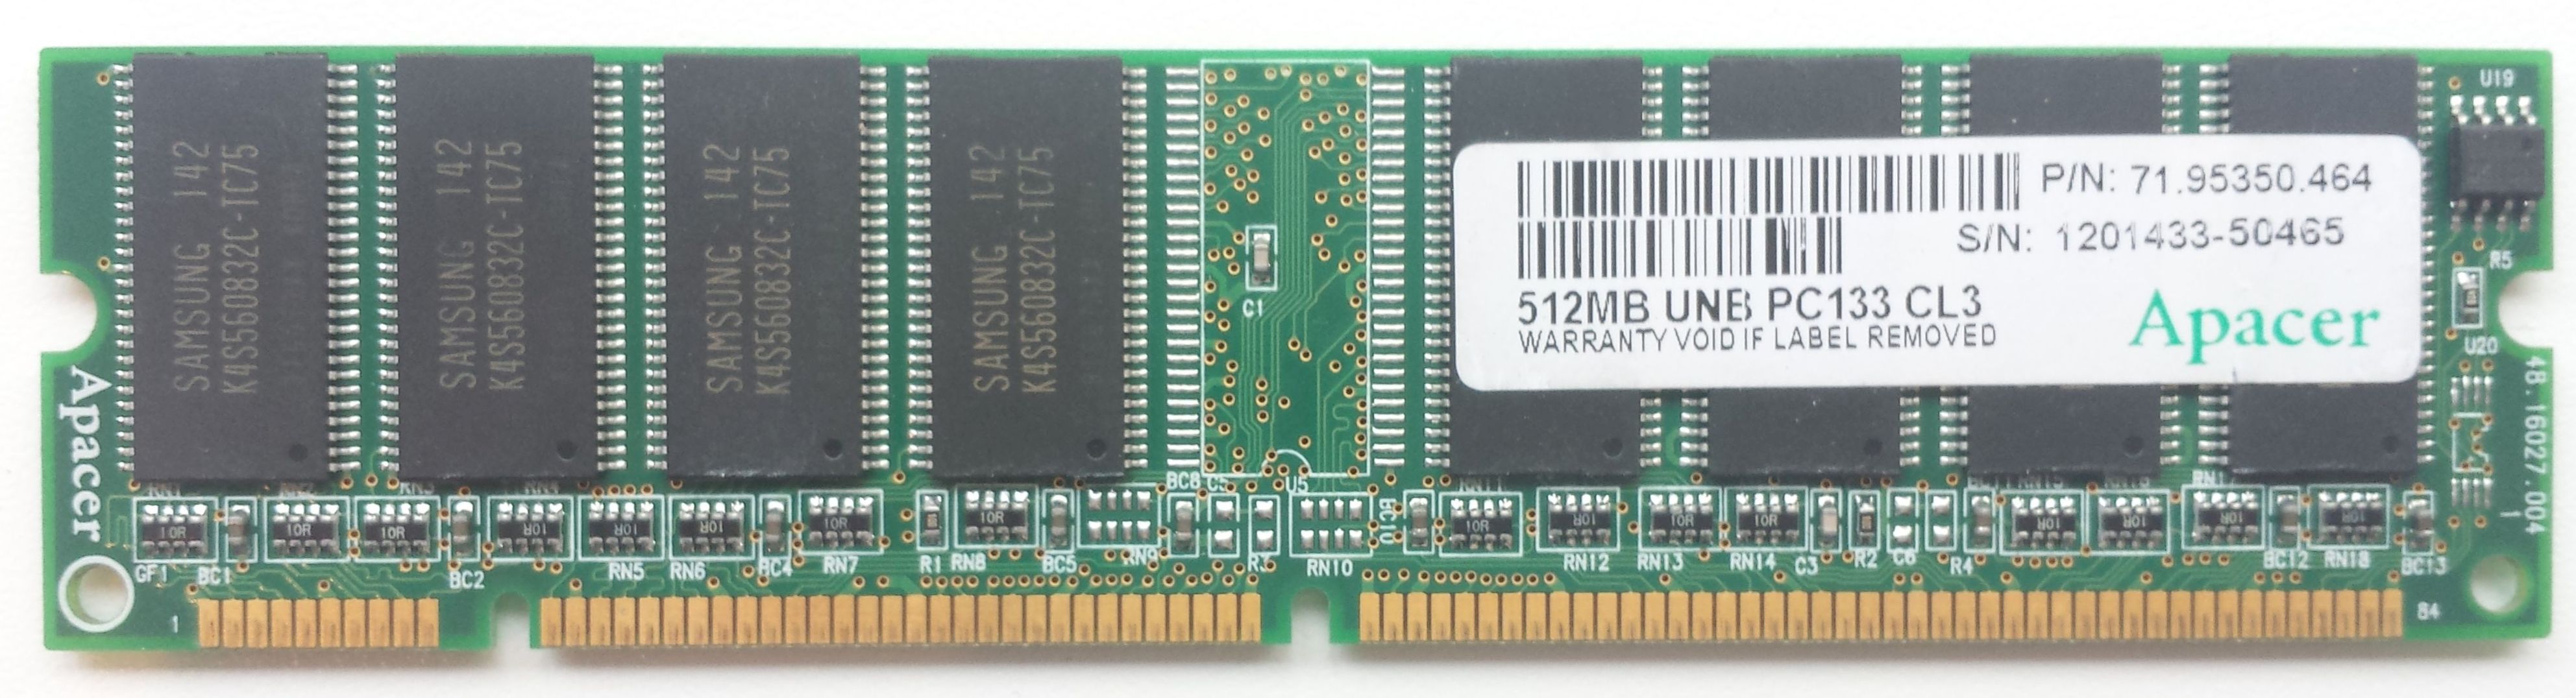 SDRAM 512MB 133Mhz / Apacer 71.95350.464